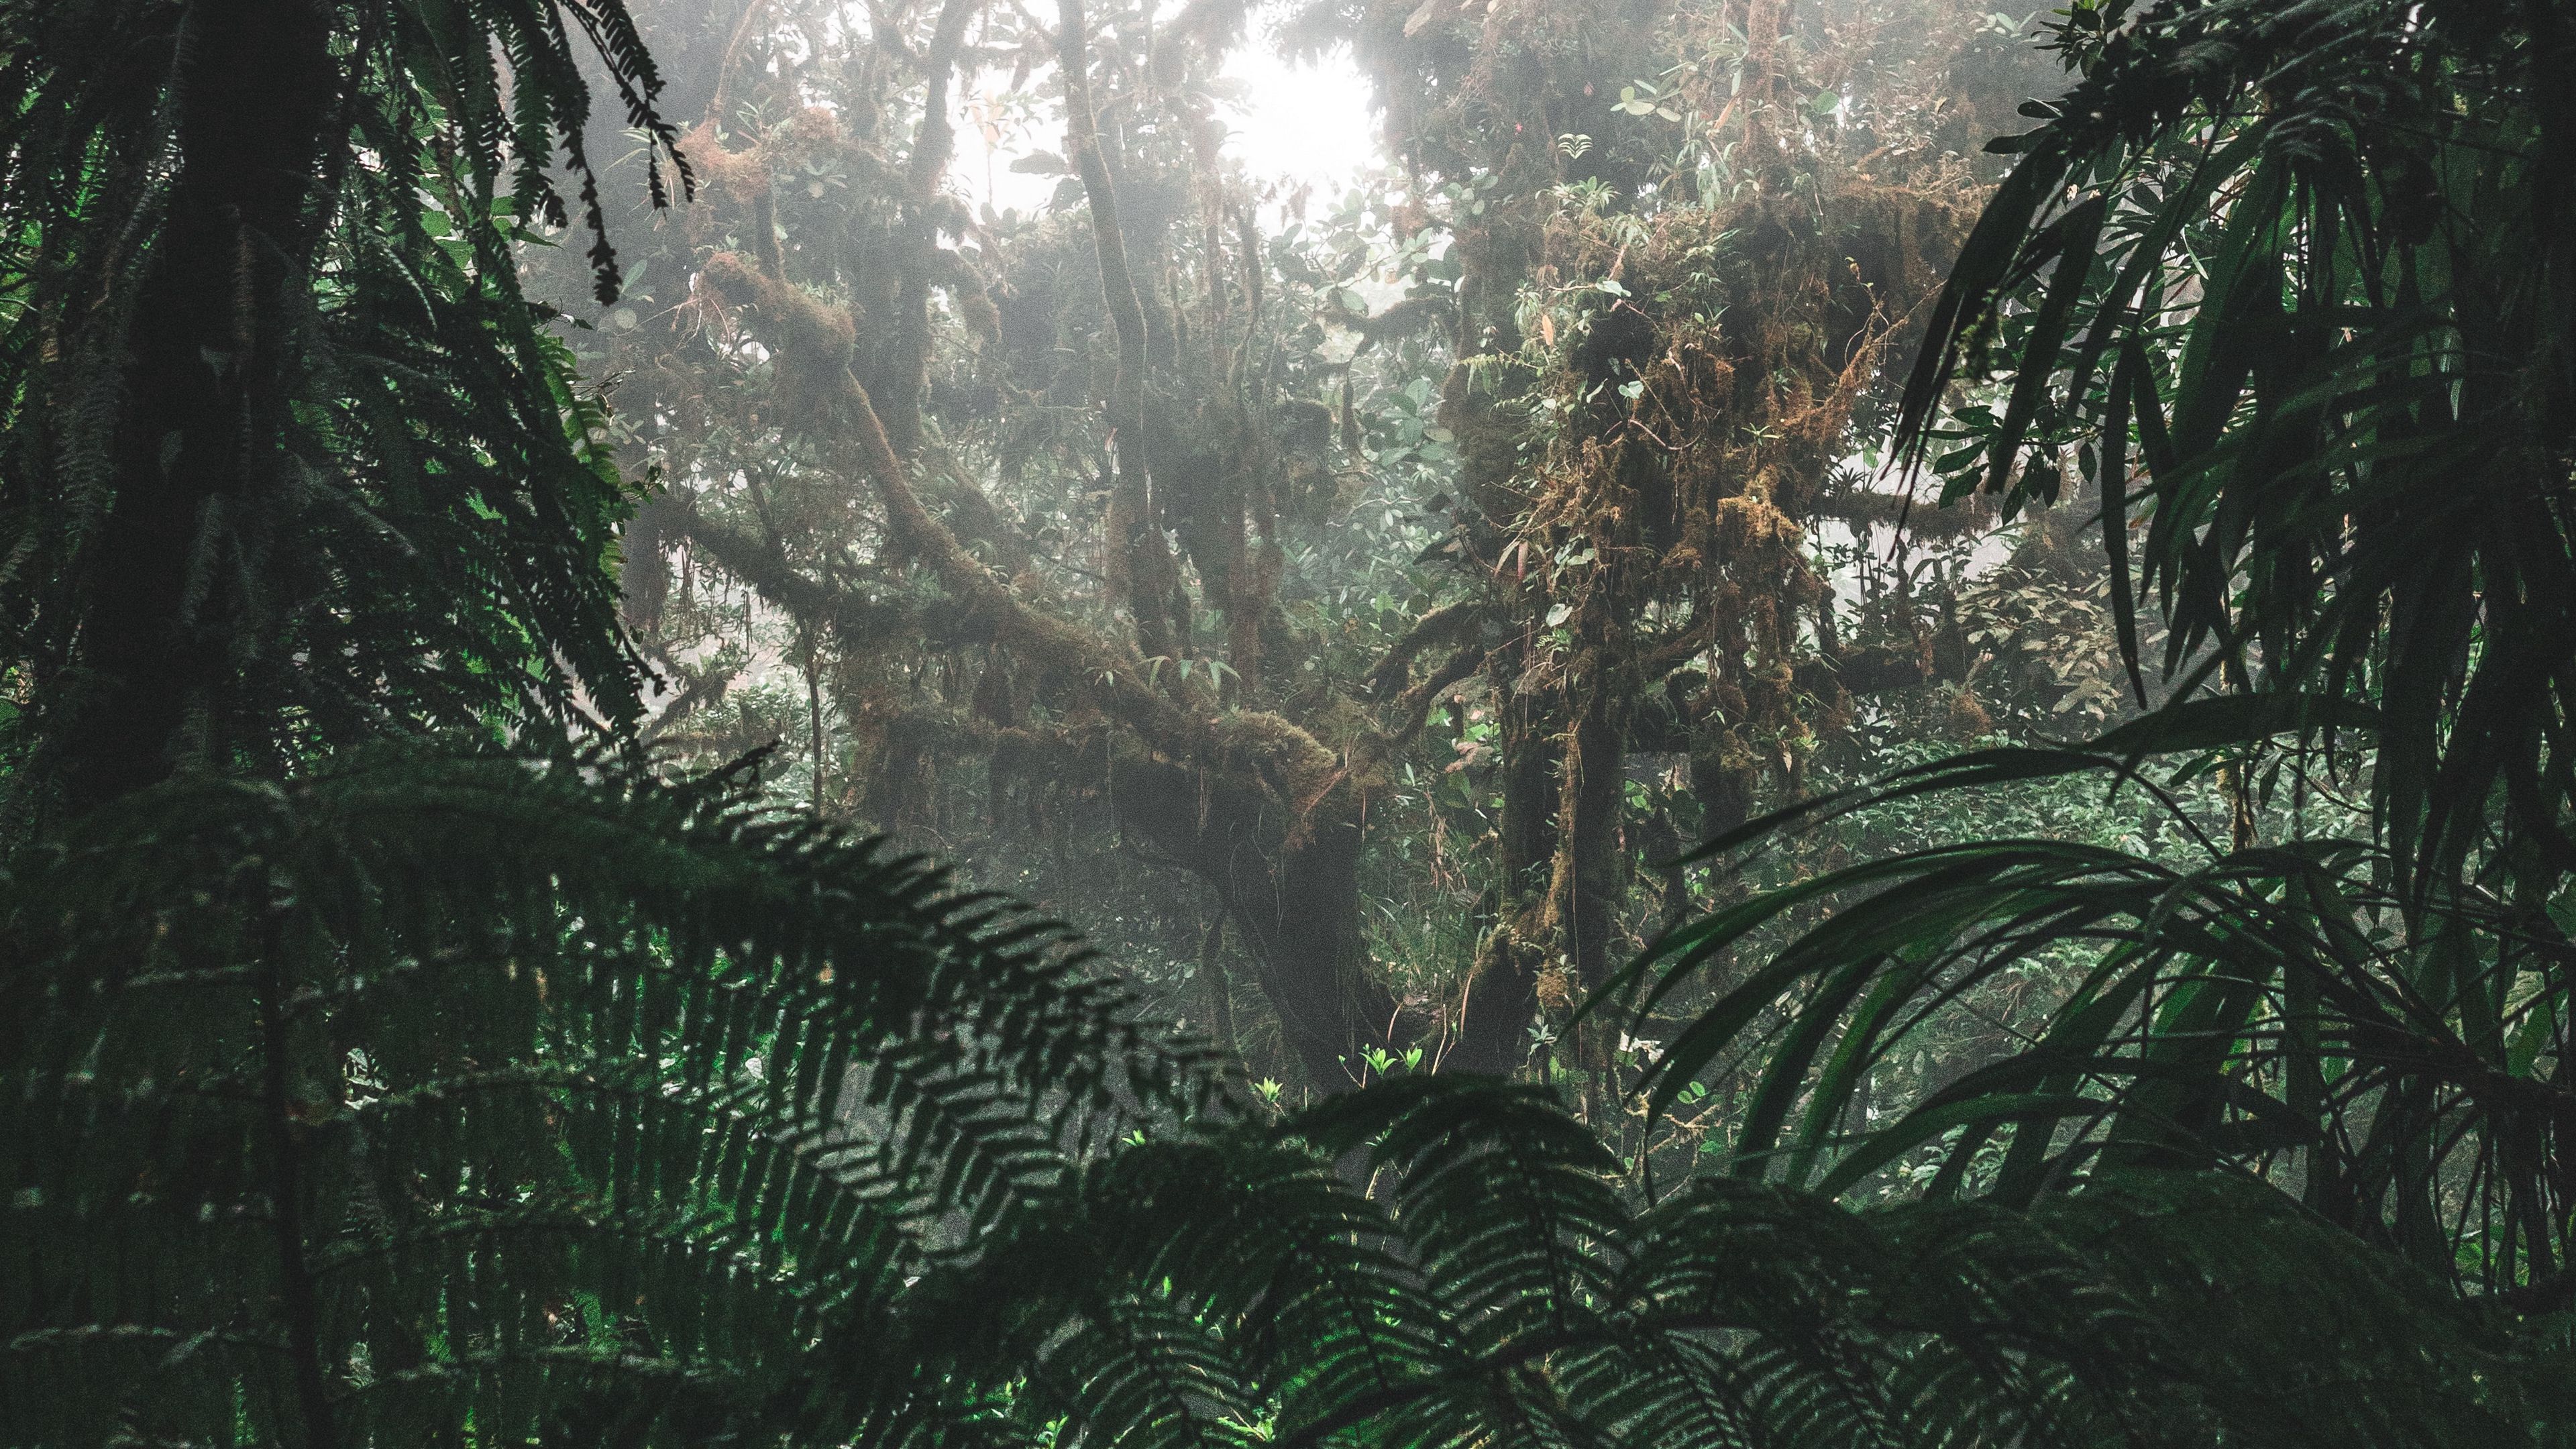 Download wallpaper 3840x2160 jungle, forest, fog, trees, bushes, tropics 4k uhd 16:9 HD background